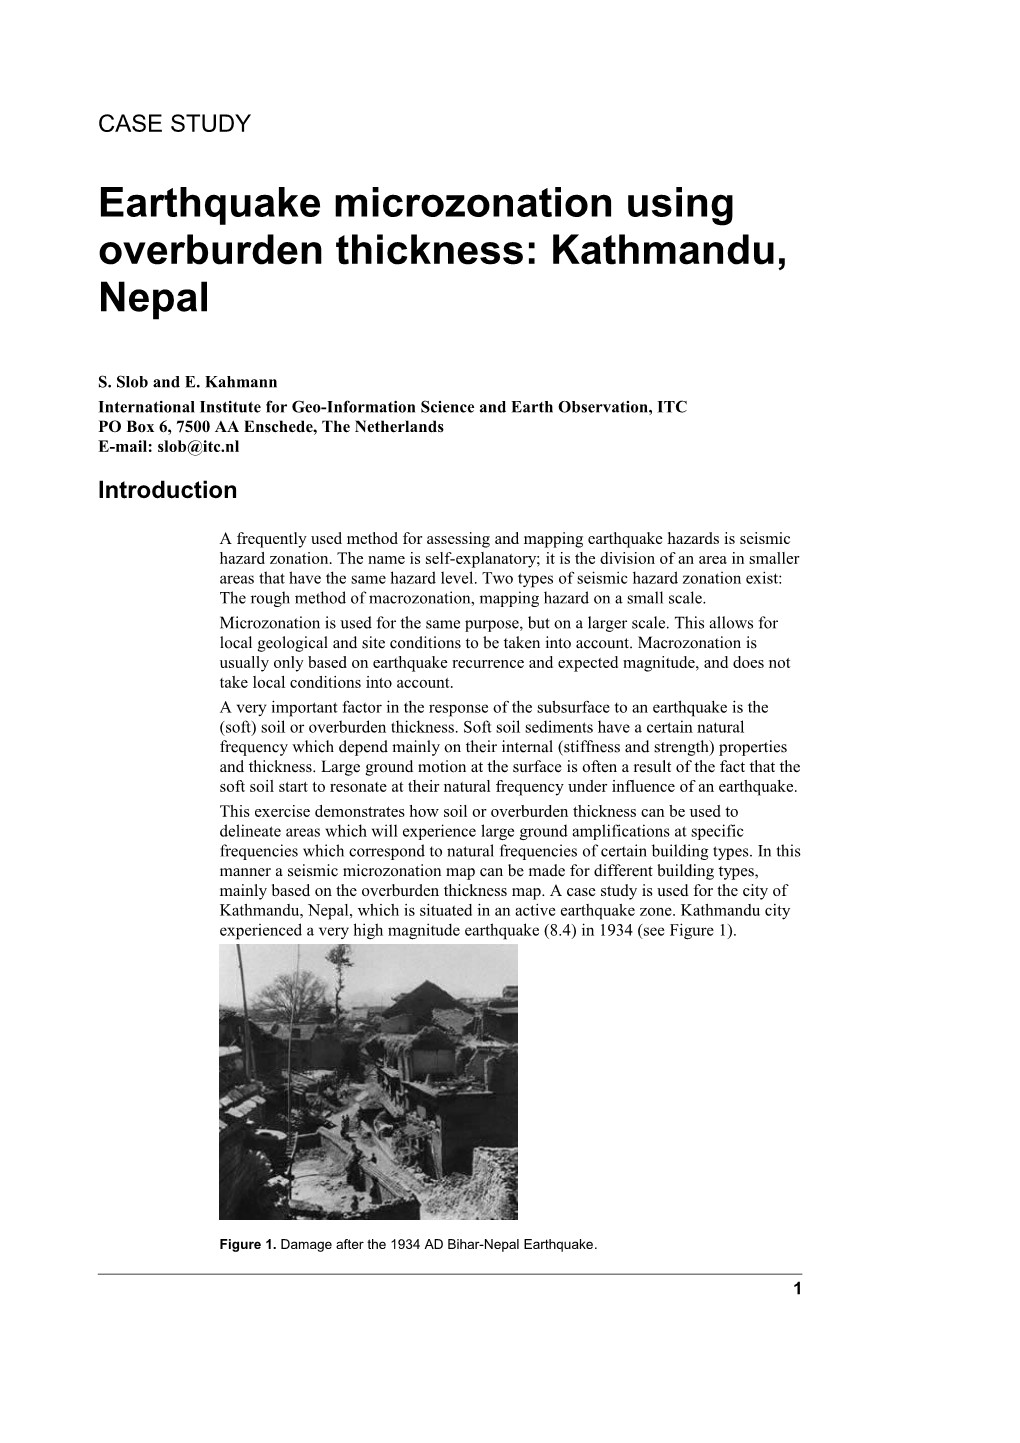 Earthquake Microzonation Using Overburden Thickness: Kathmandu, Nepal